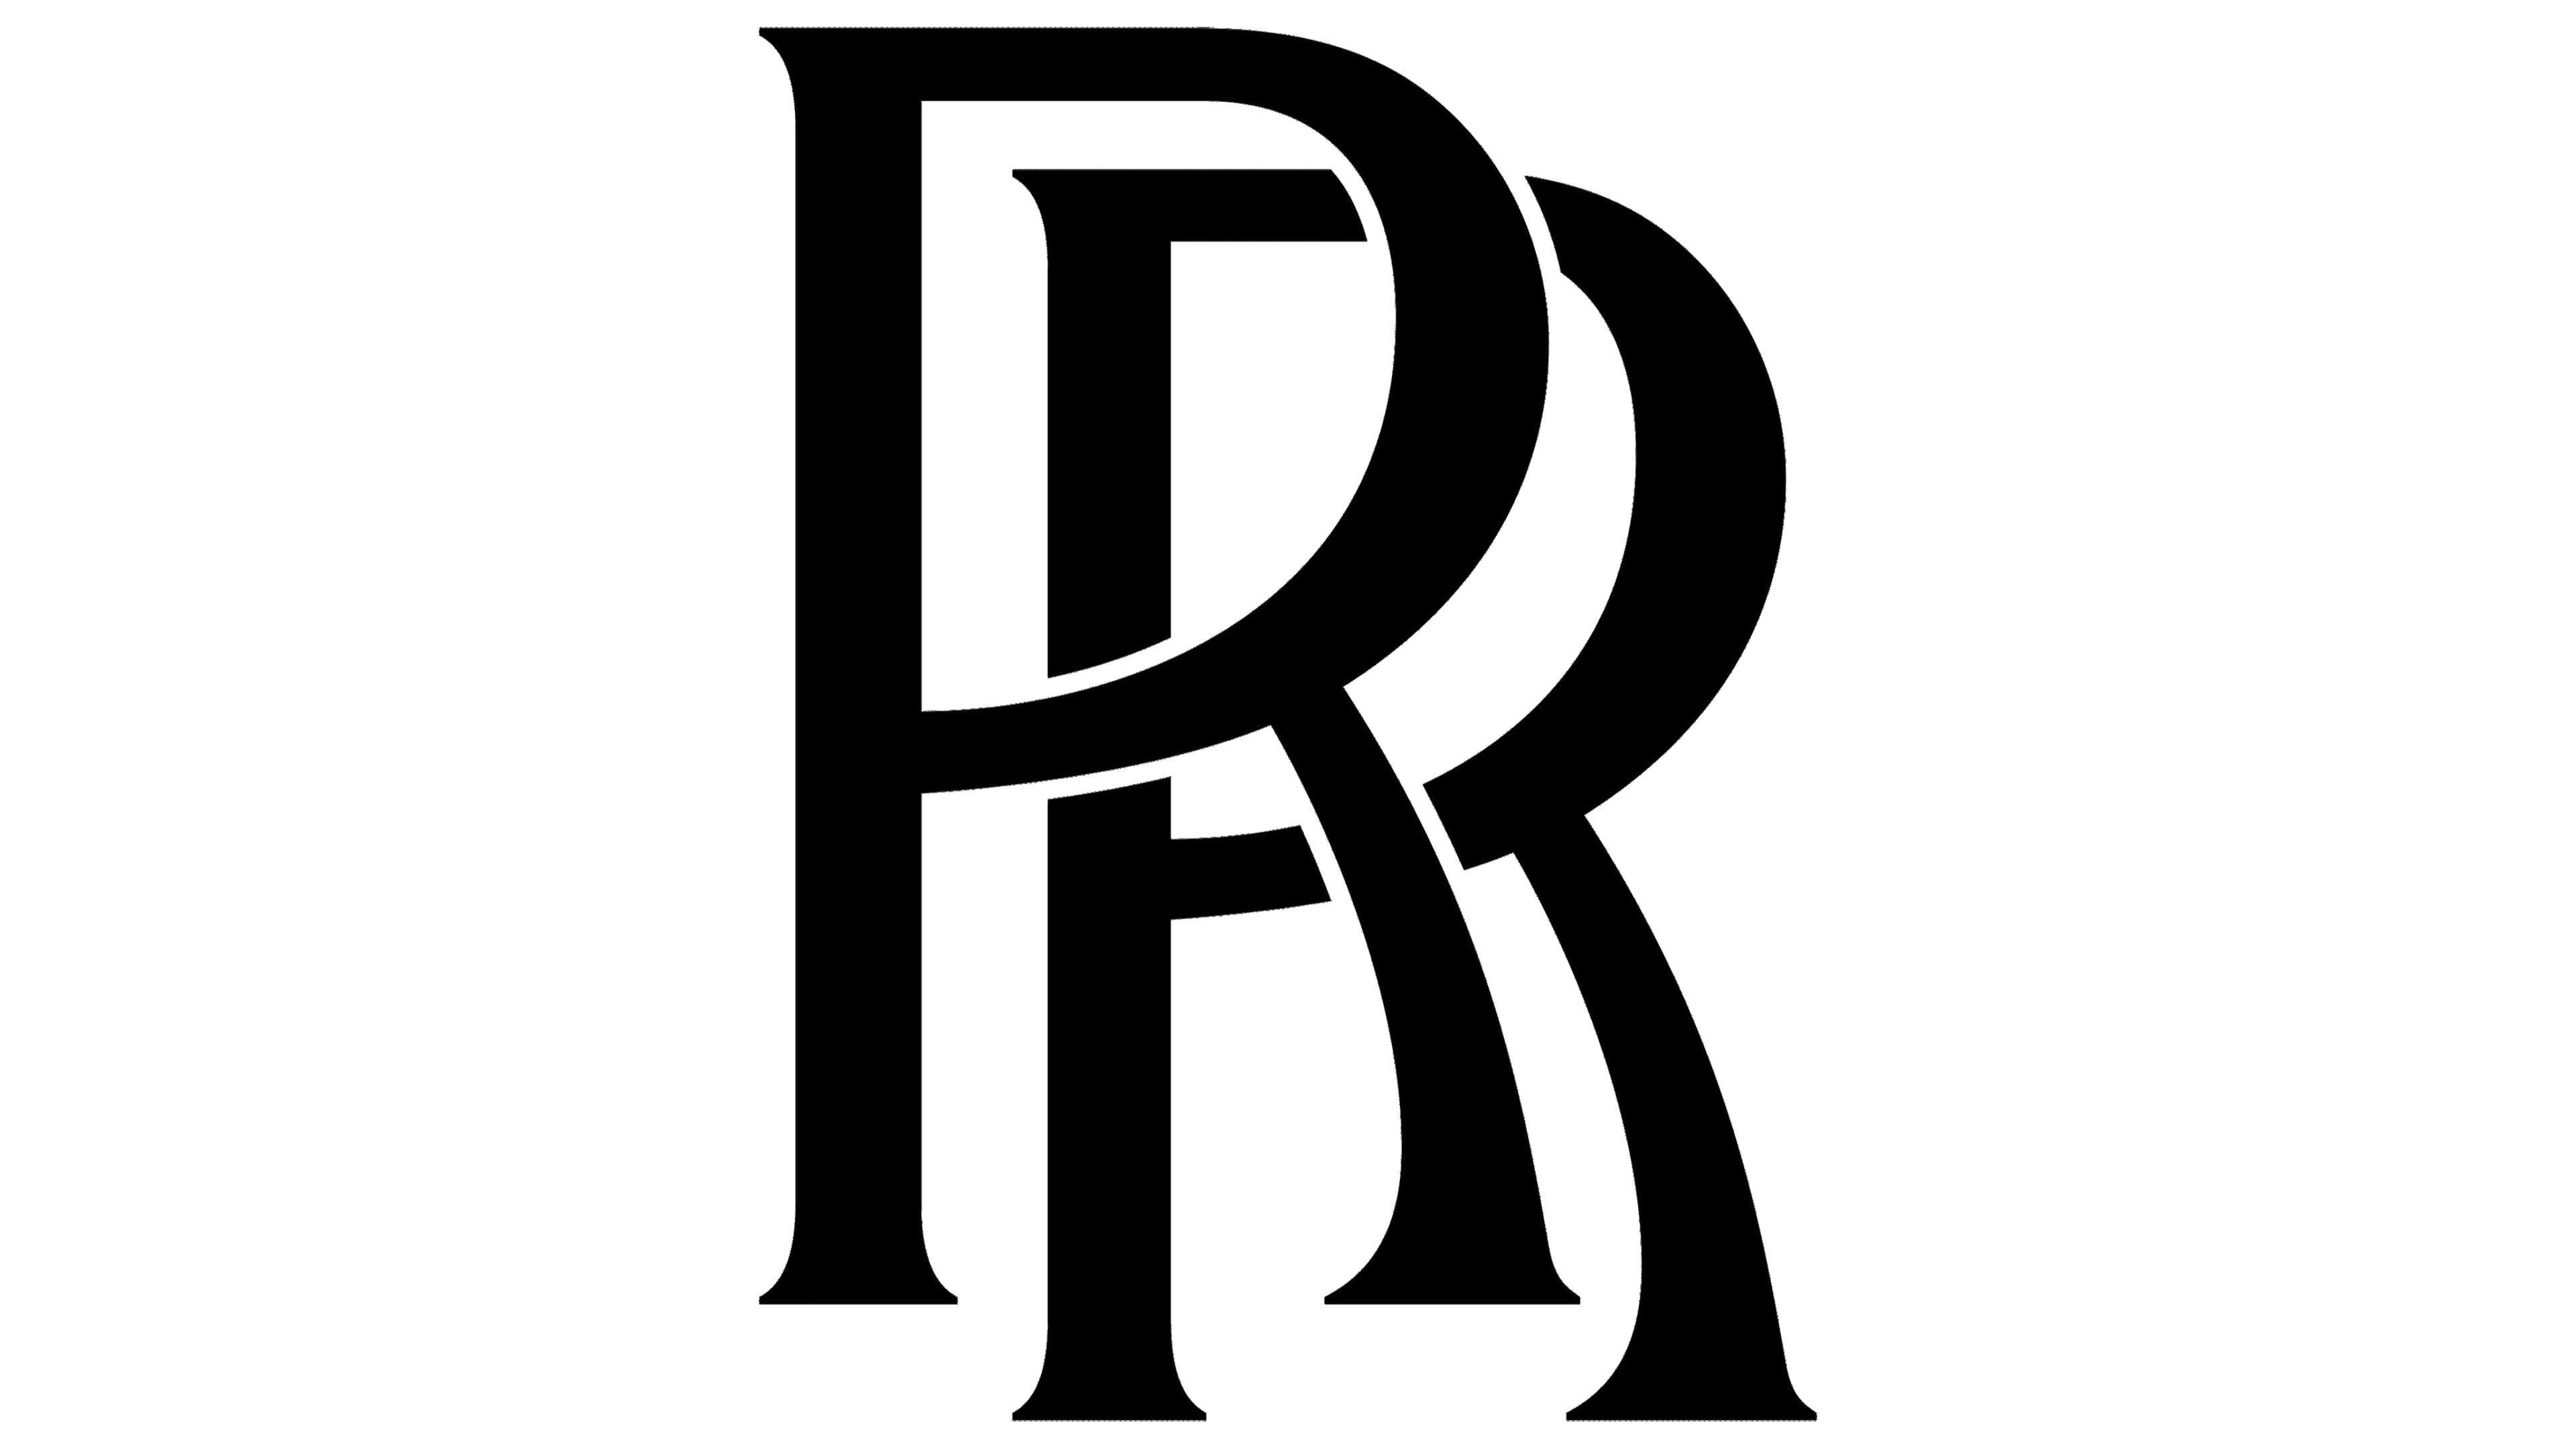 Pentagram designs edgier visual identity for RollsRoyce  Design Week